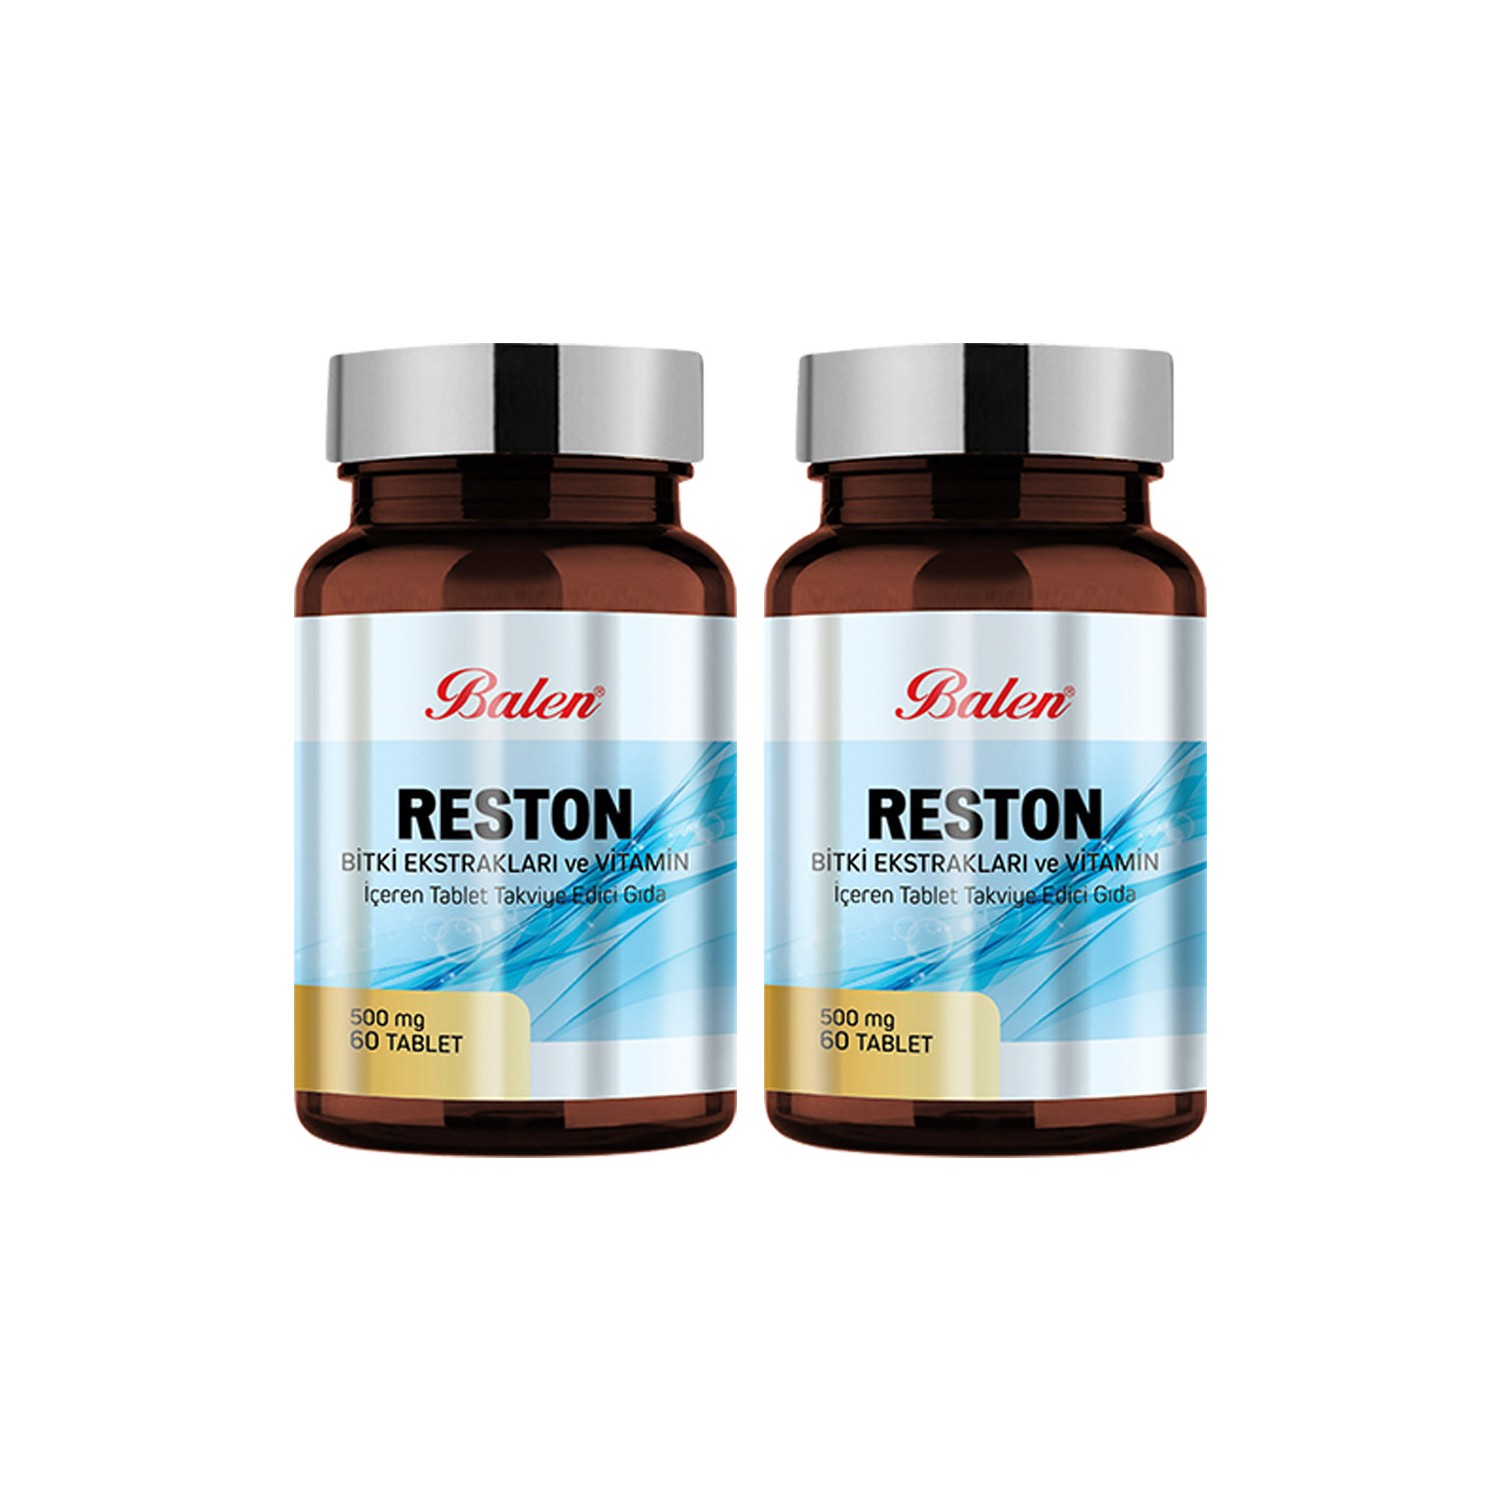 Пищевая добавка Balen Reston 500 мг, 2 упаковки по 60 капсул фото